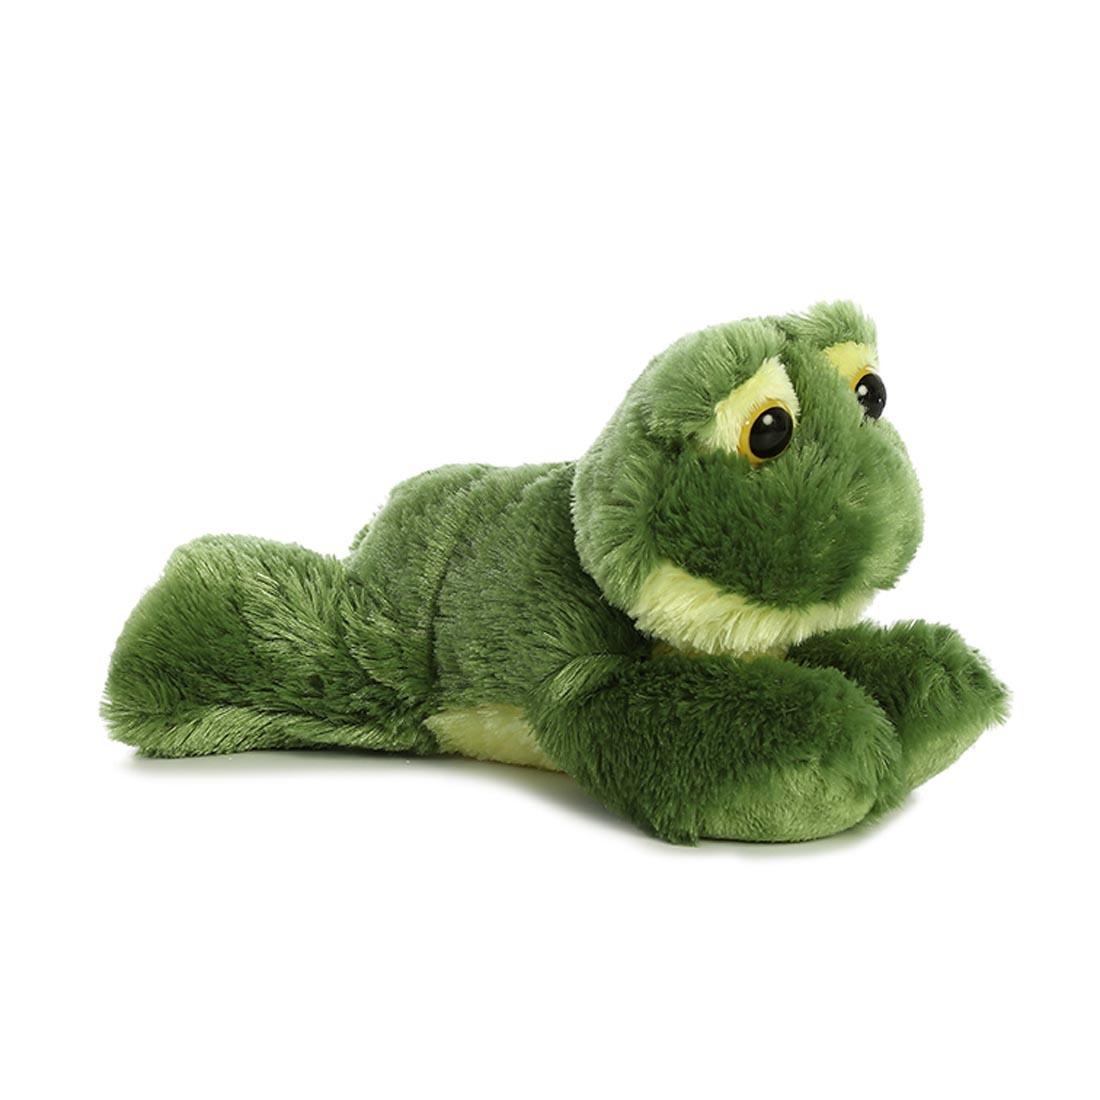 green frog stuffed animal